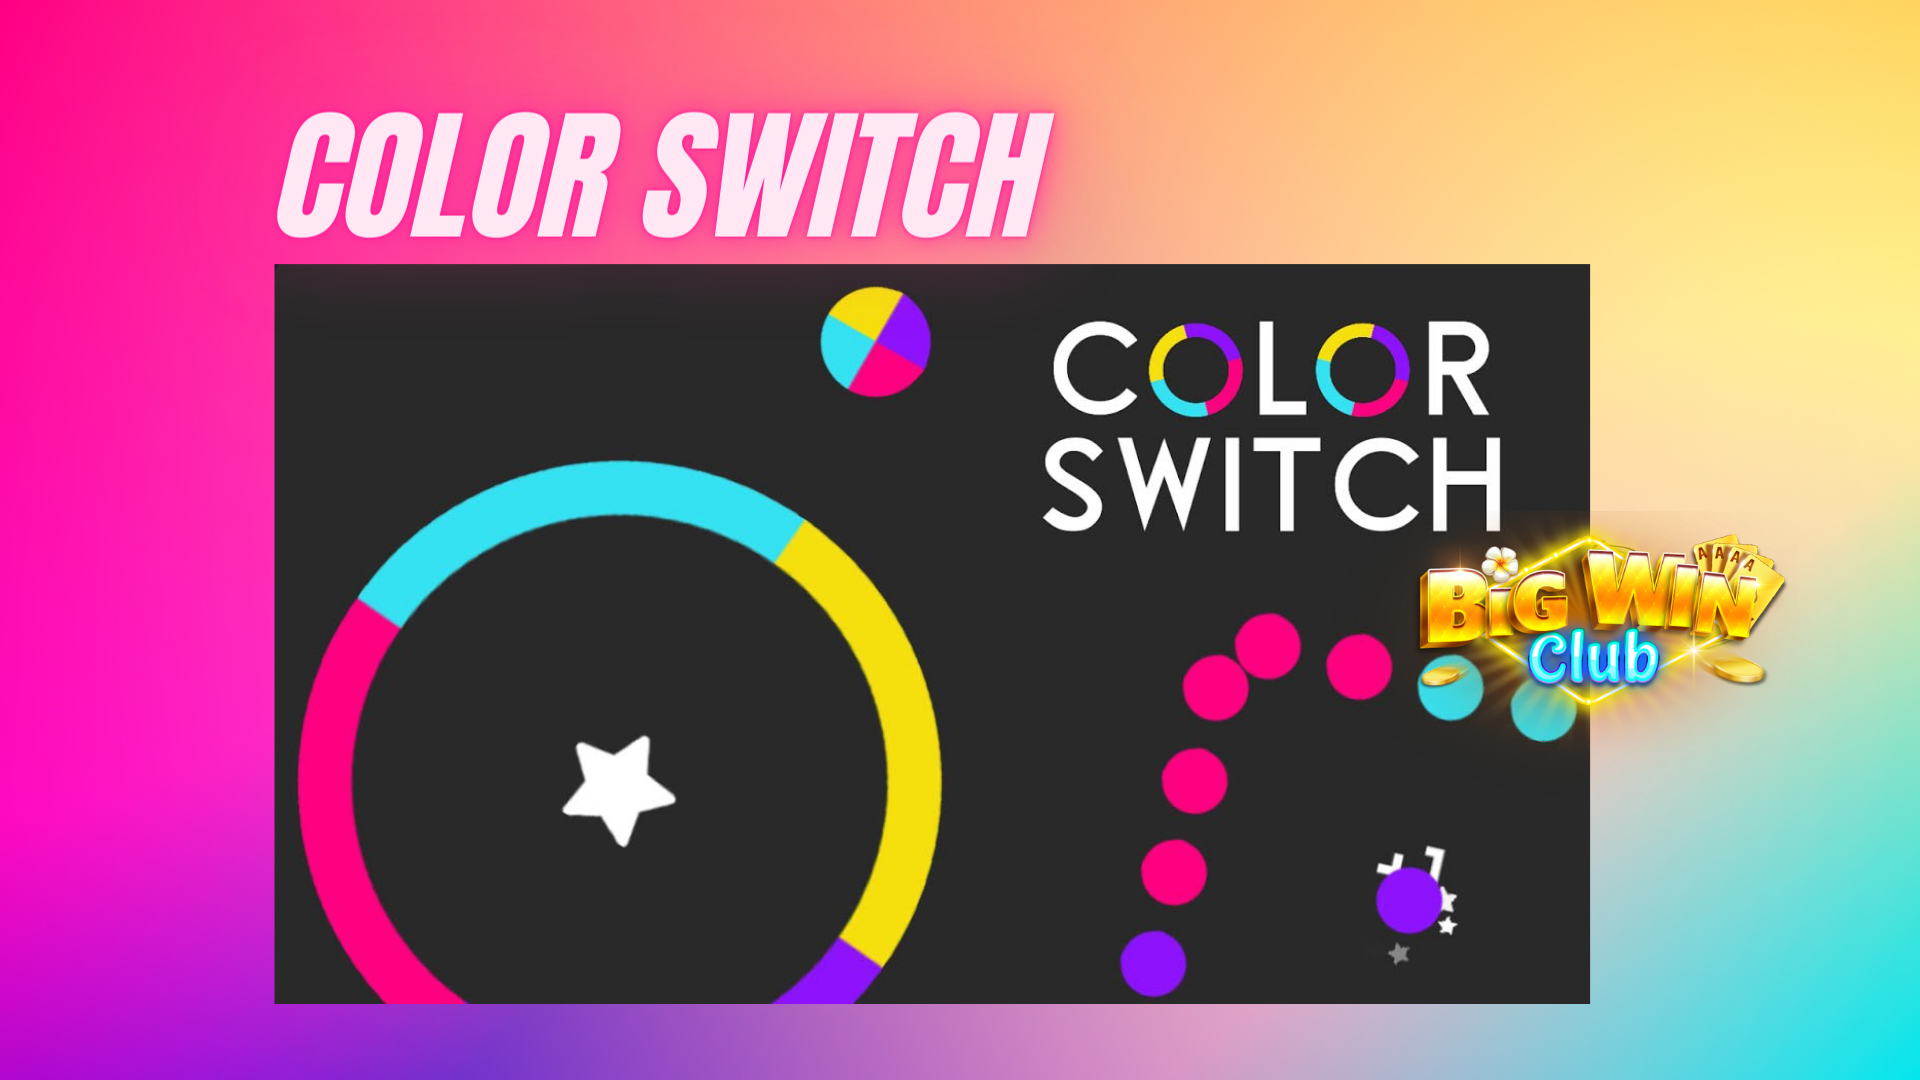 Ano ang nangyari sa Color Switch?